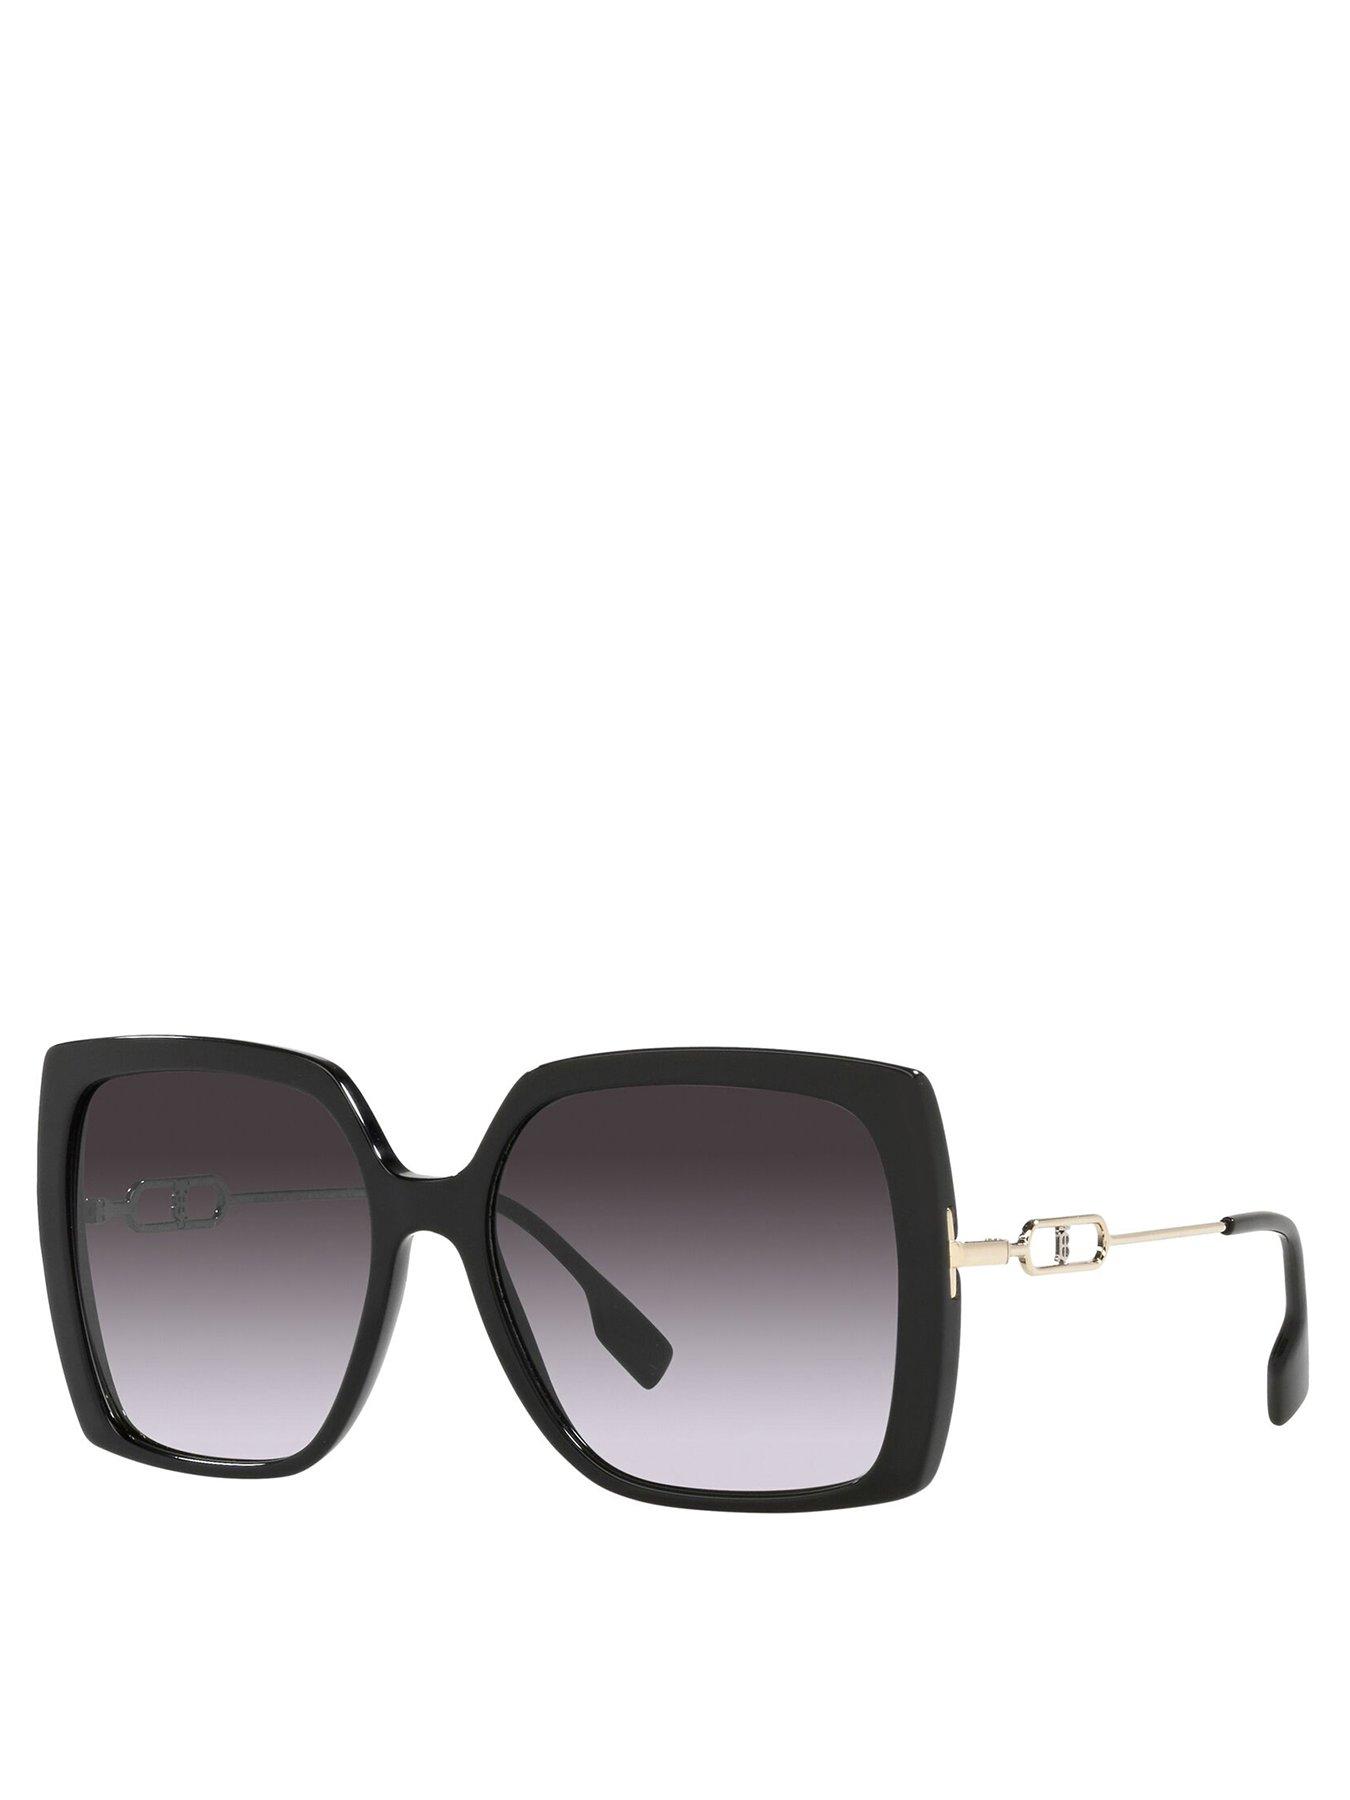 Accessories Luna Sunglasses - Black